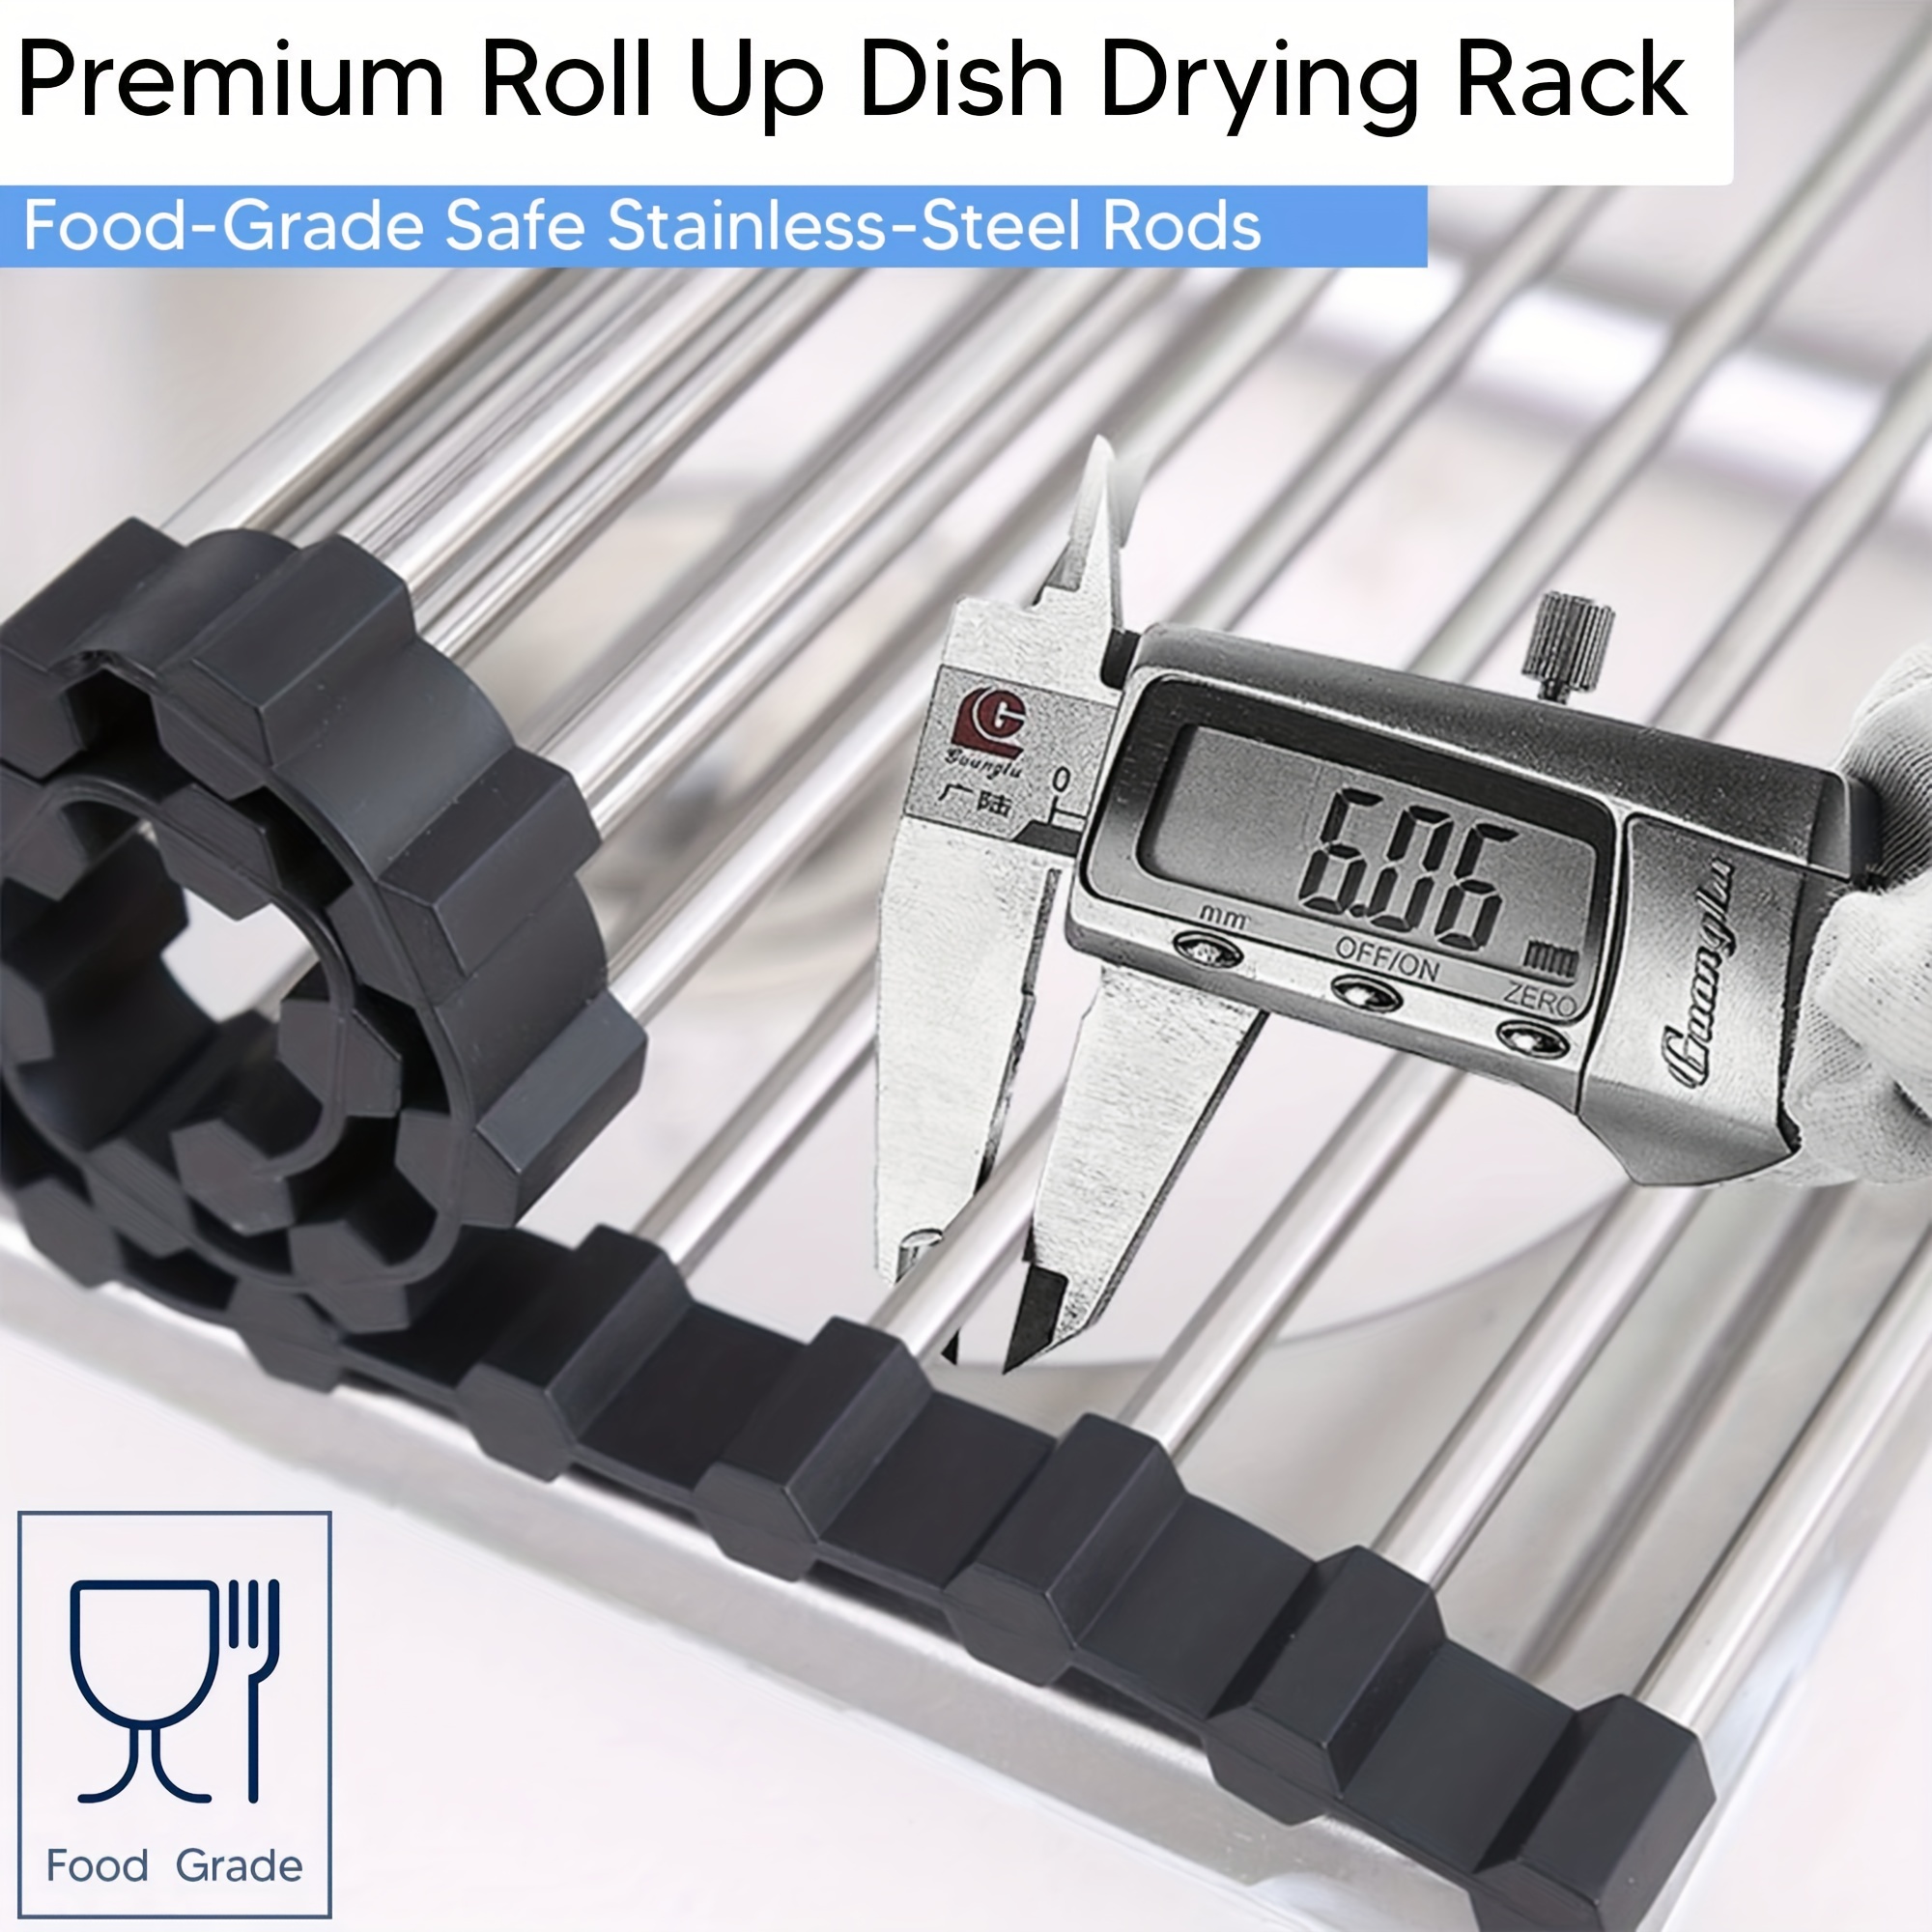 Premium Multipurpose OverSink RollUp Dish Drying Rack